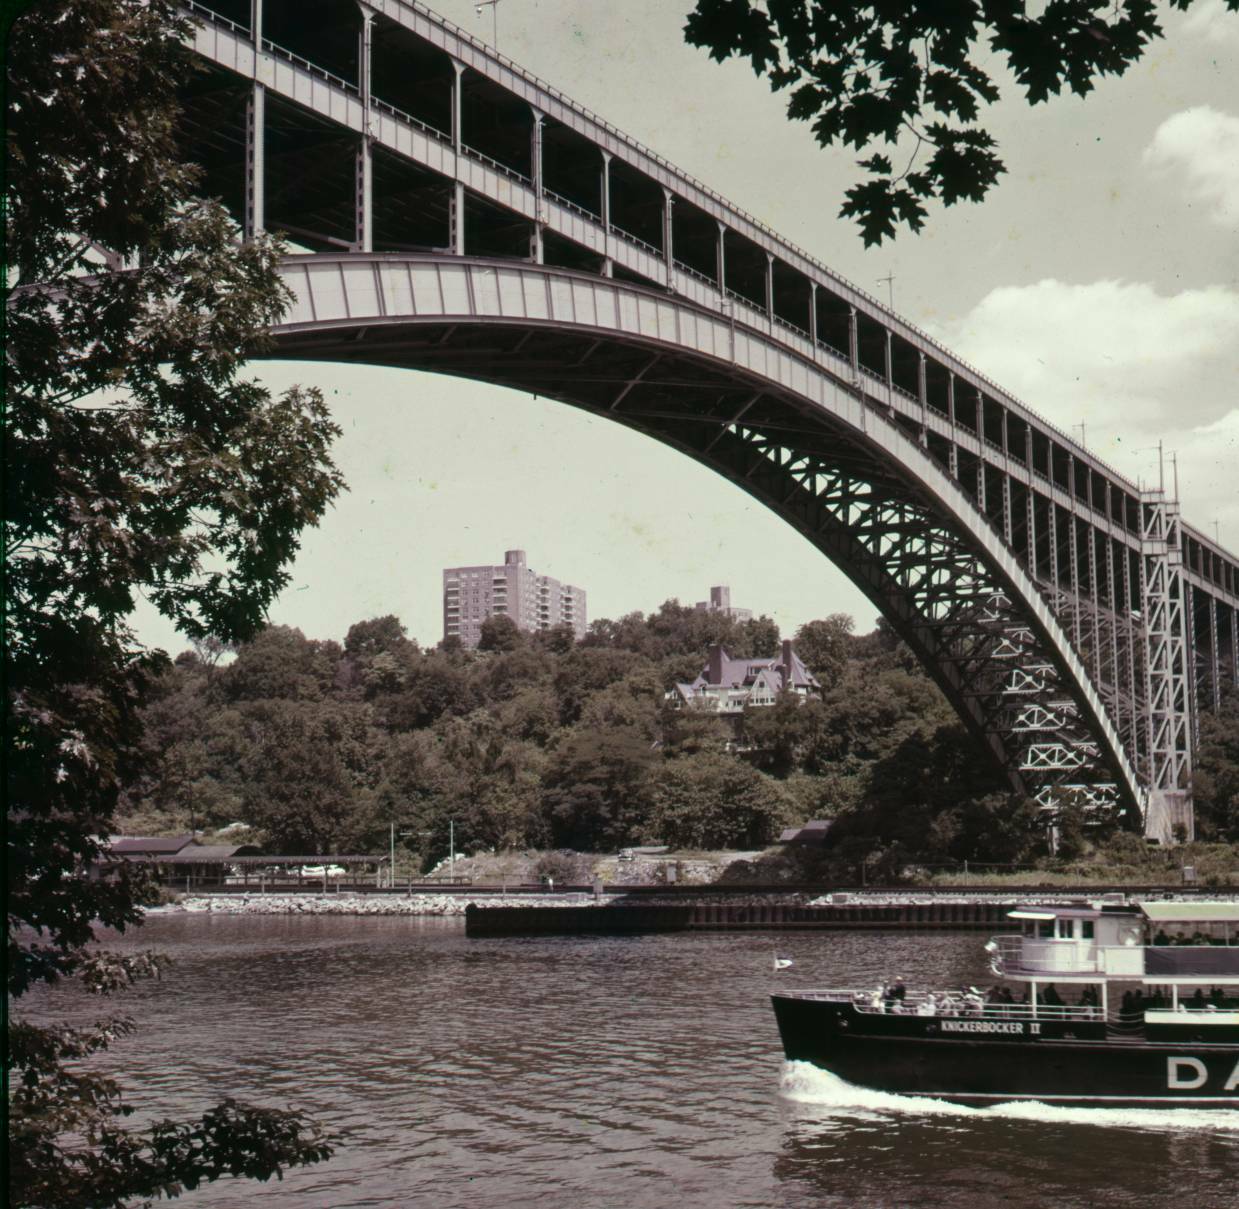 LC16-01  HENRY HUDSON BRIDGE  Orig 2x2 Transparency NYC 1957  KNICKERBOCKER BOAT